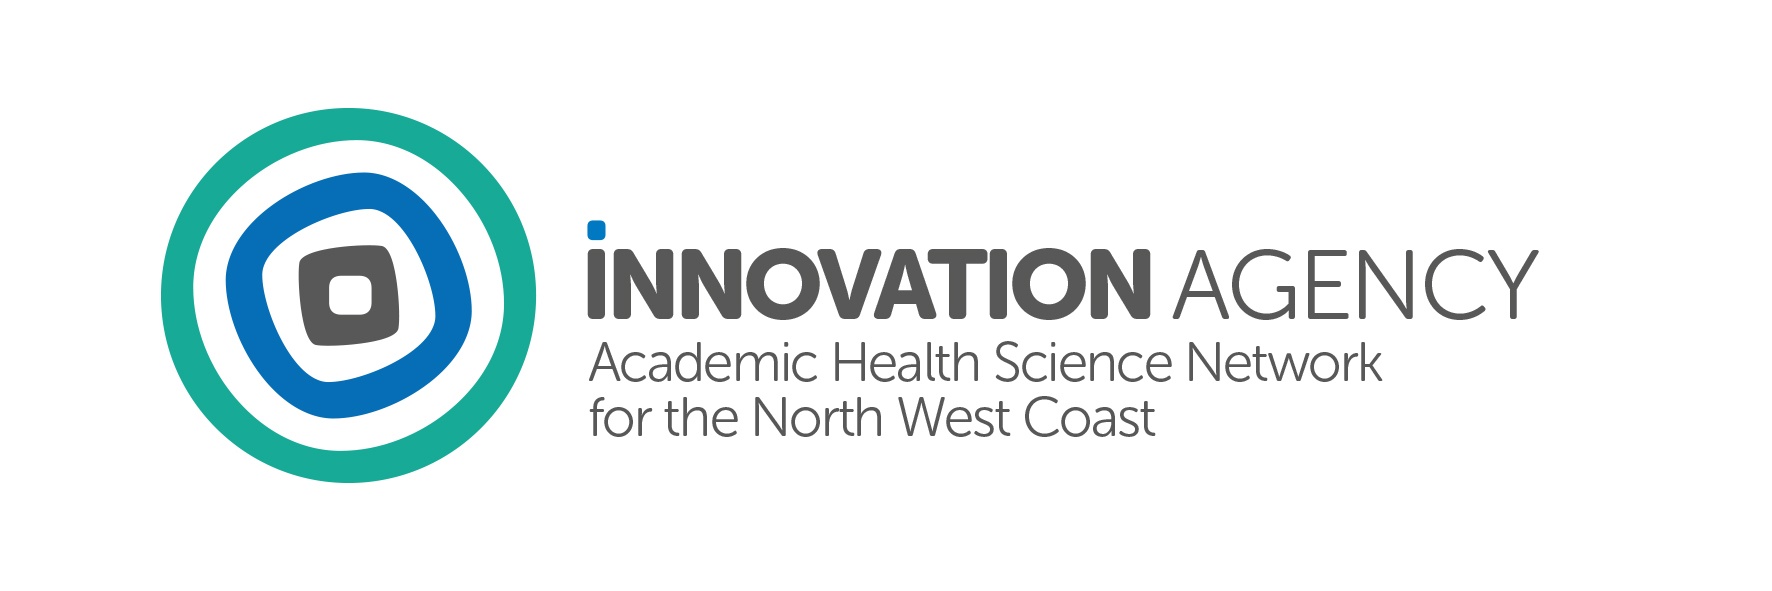 Innovation Agency Logo 